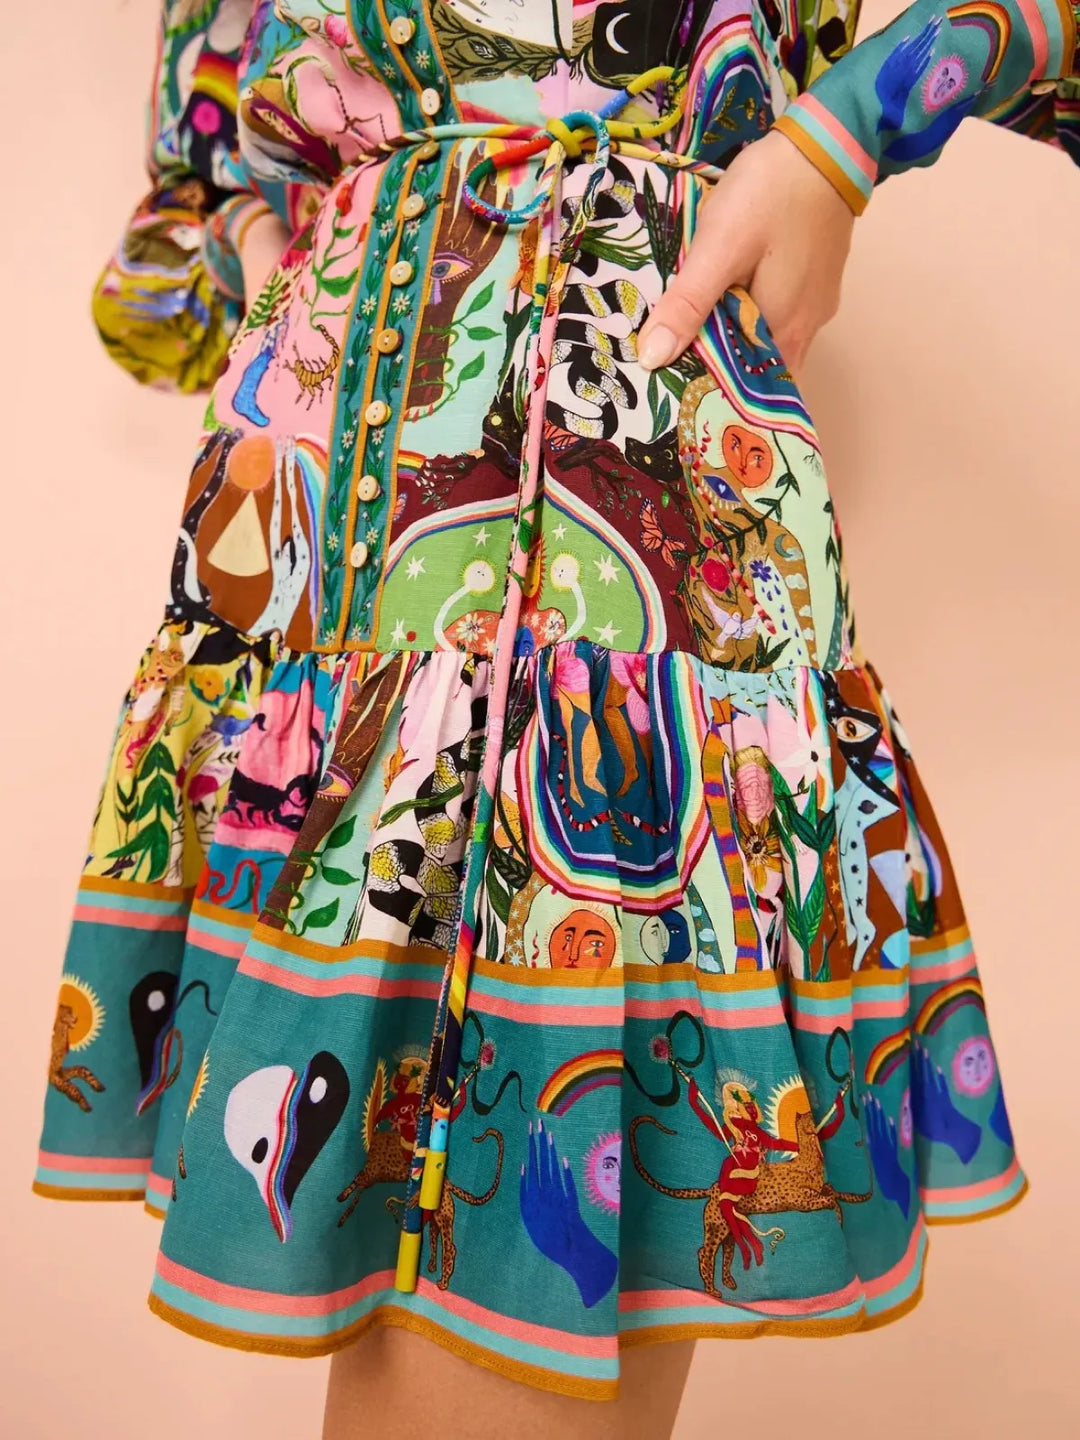 Colorful Mini-Dress